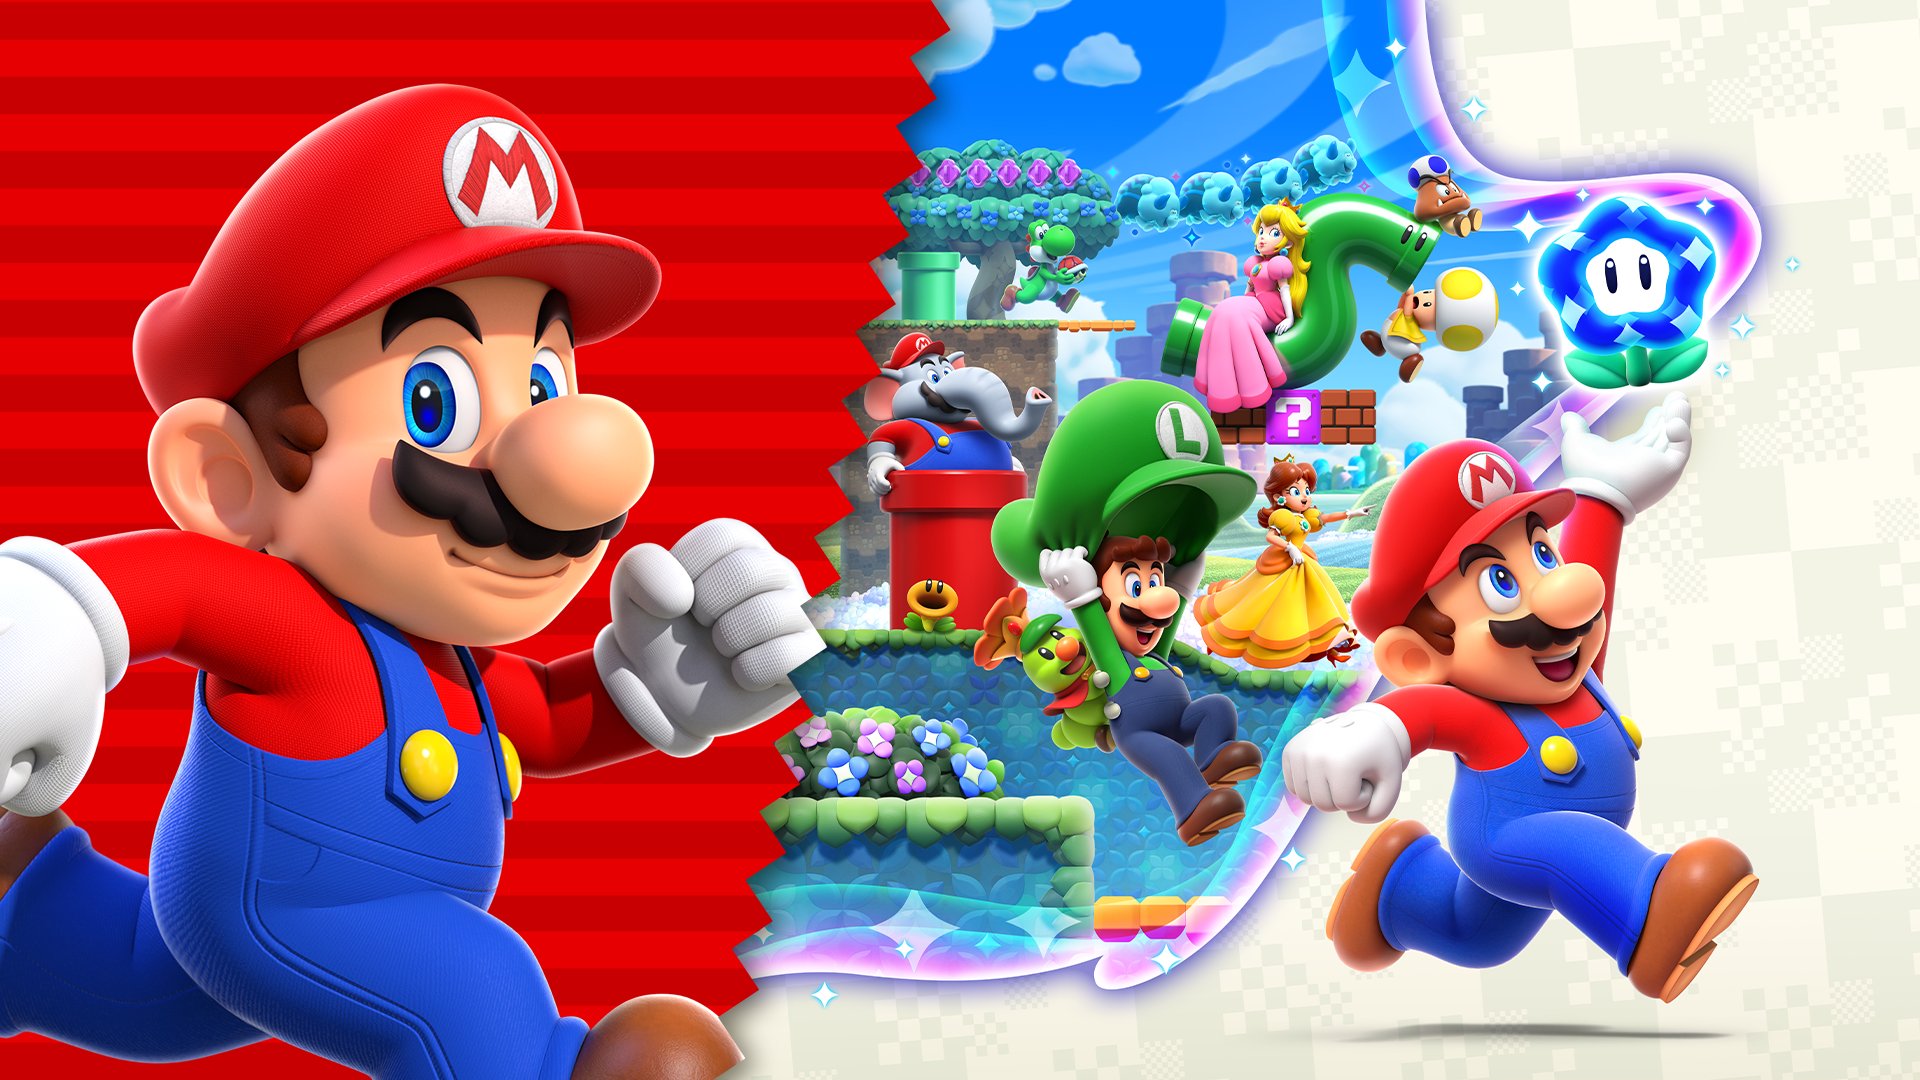 ‘Super Mario Run’ Is Celebrating ‘Super Mario Bros. Wonder’ With Daily Free Stage Unlocks Until November 30th